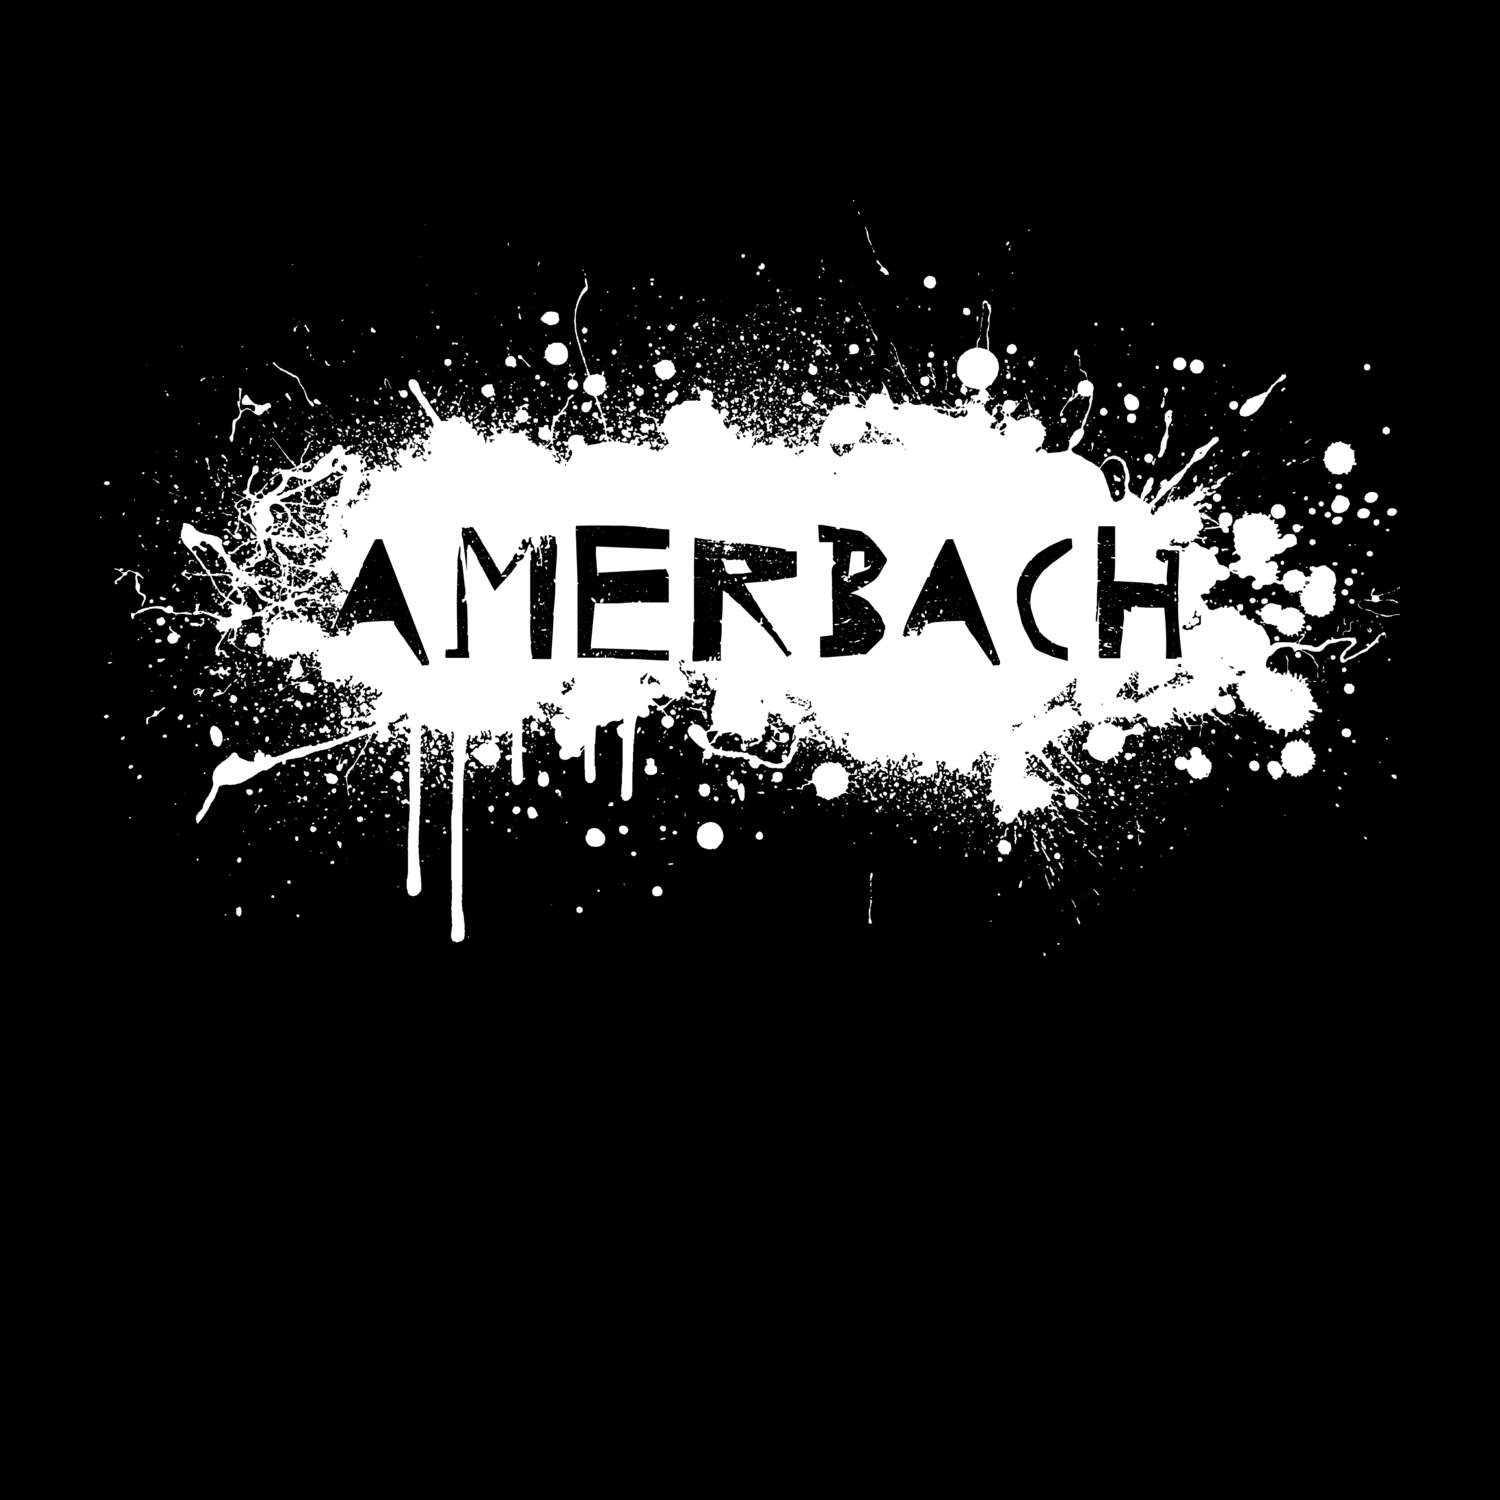 Amerbach T-Shirt »Paint Splash Punk«